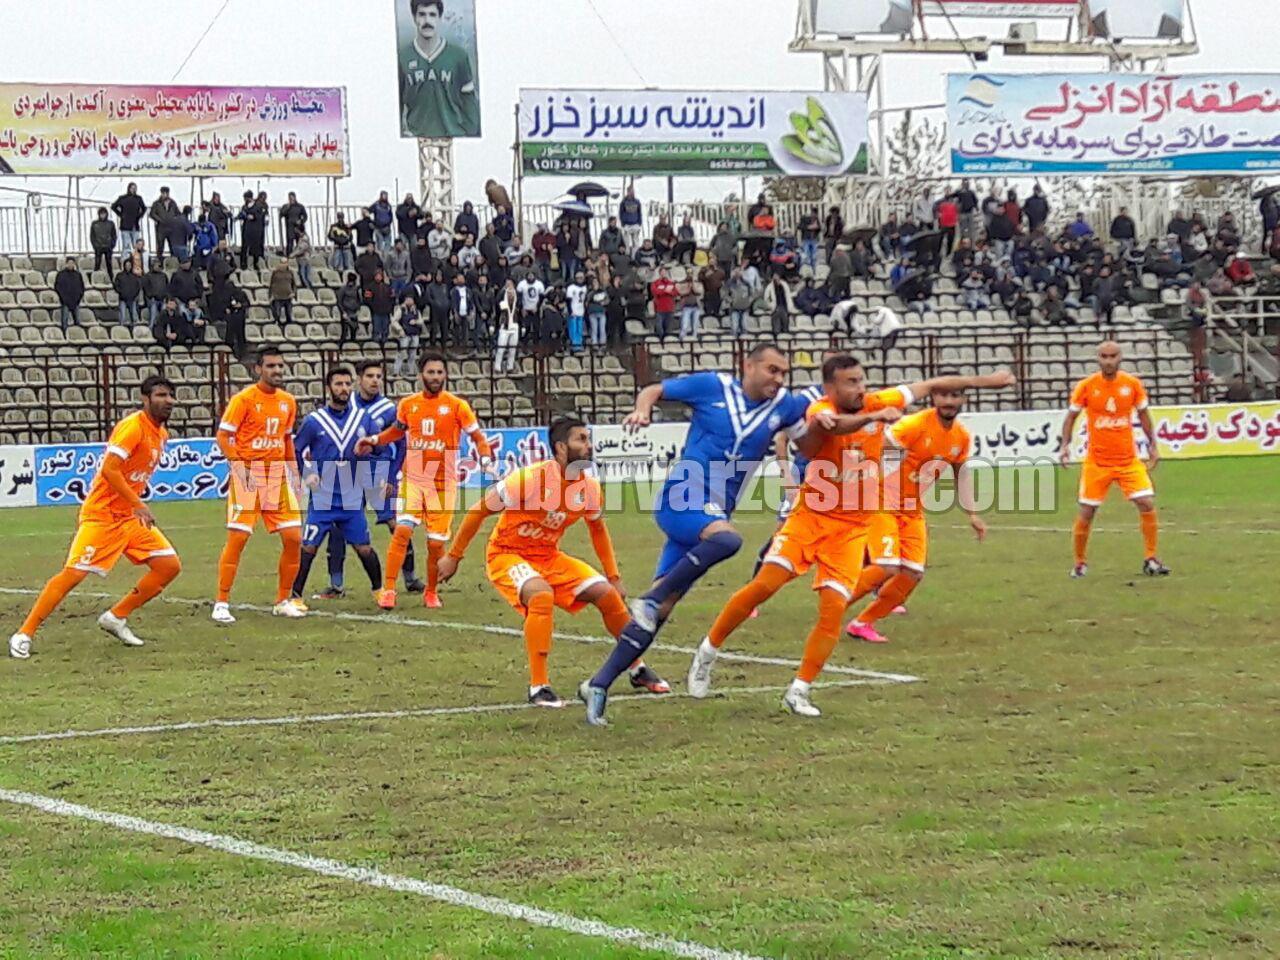 نتایج هفته چهاردهم لیگ دسته اول فوتبال